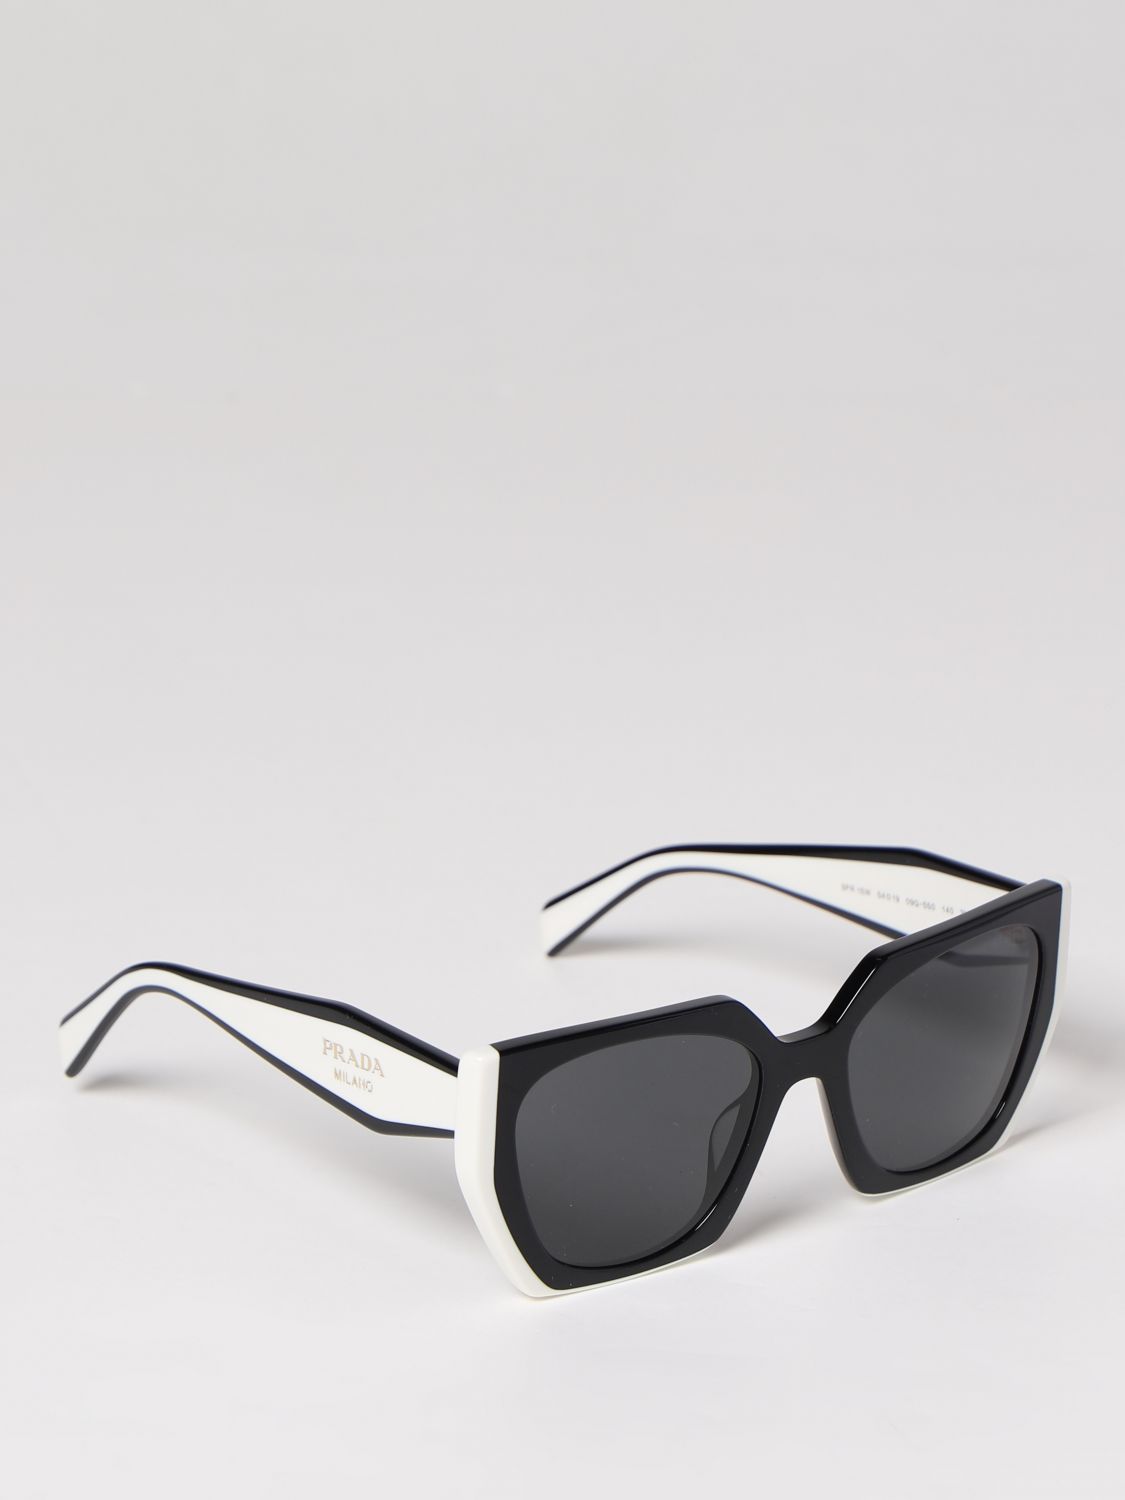 erts patrouille duidelijk PRADA: sunglasses for woman - Black | Prada sunglasses 15WS SOLE online on  GIGLIO.COM